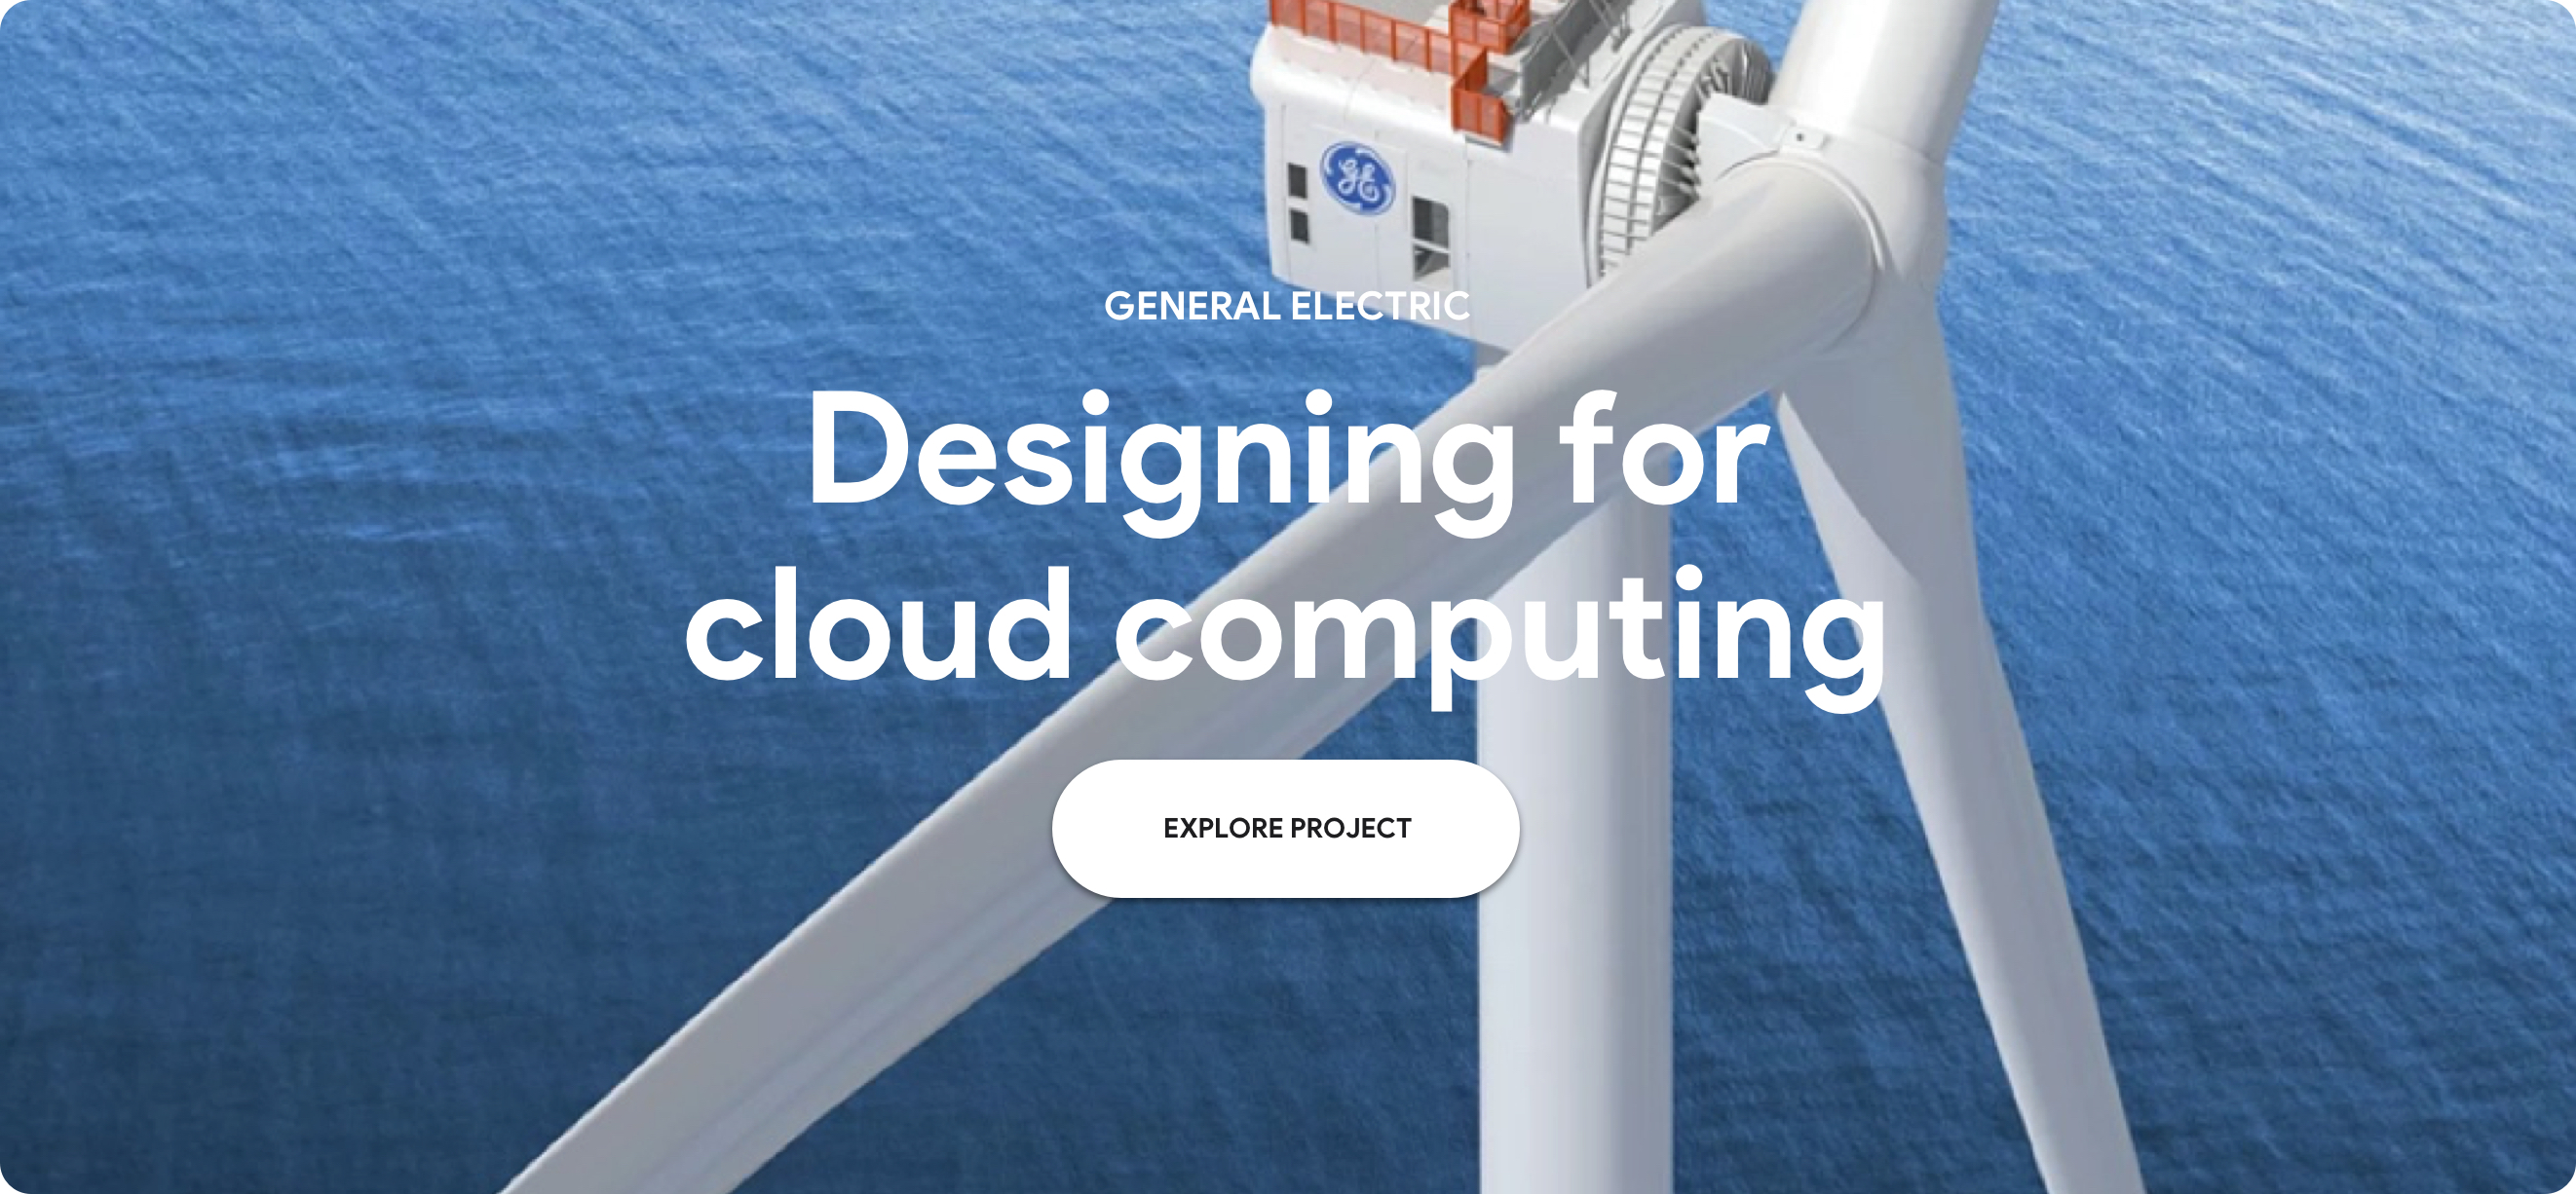 Designing for cloud computing